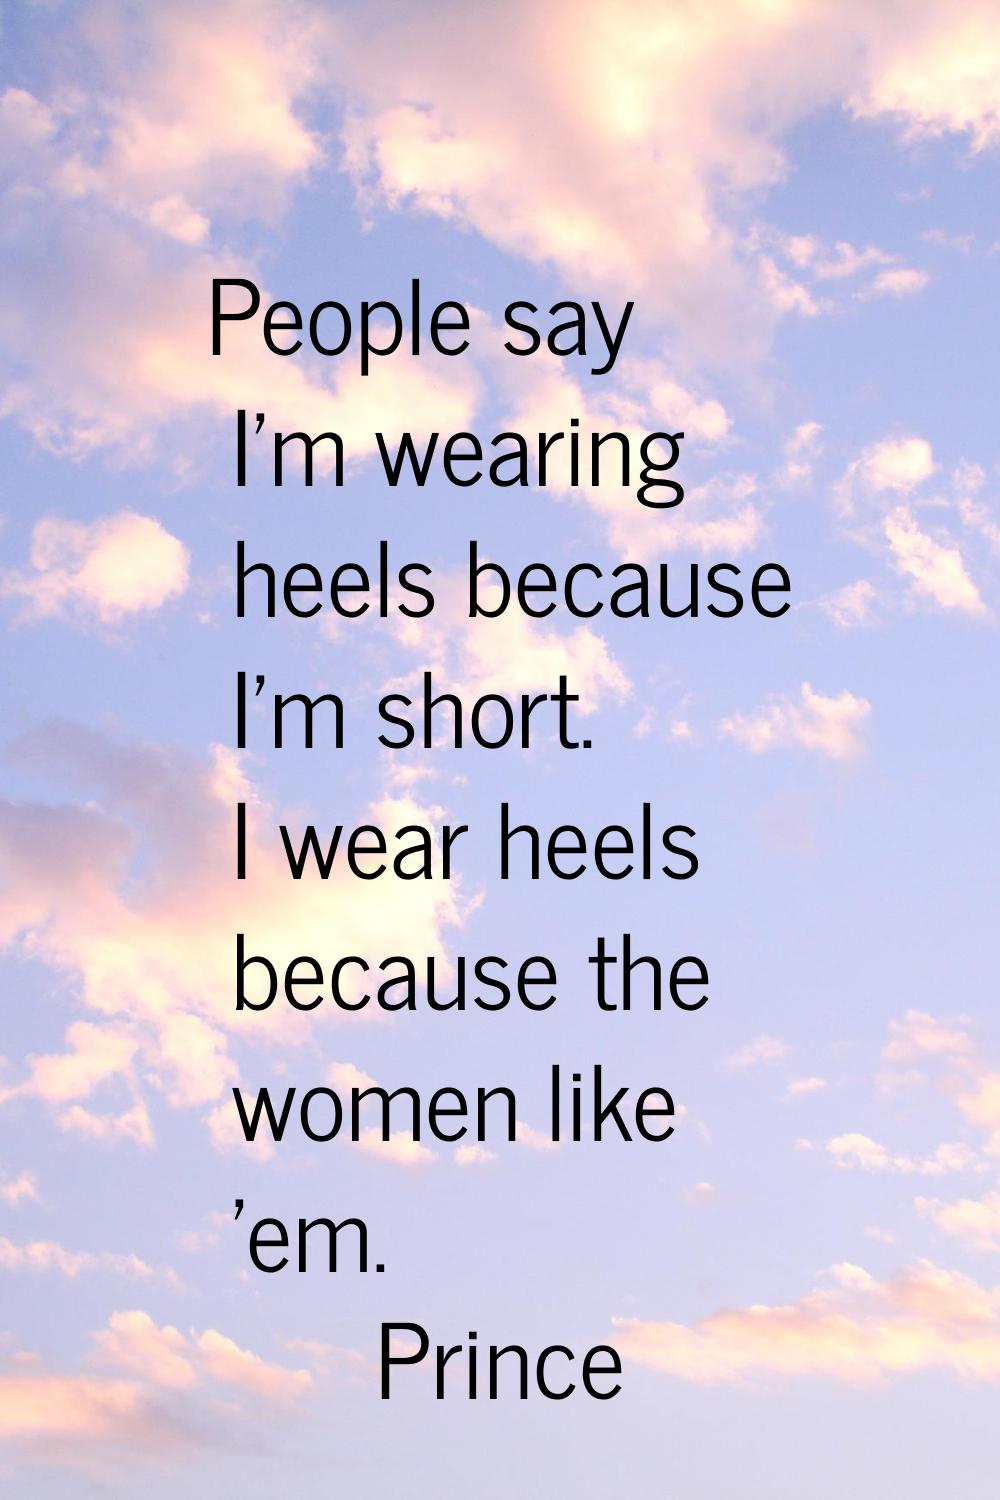 People say I'm wearing heels because I'm short. I wear heels because the women like 'em.